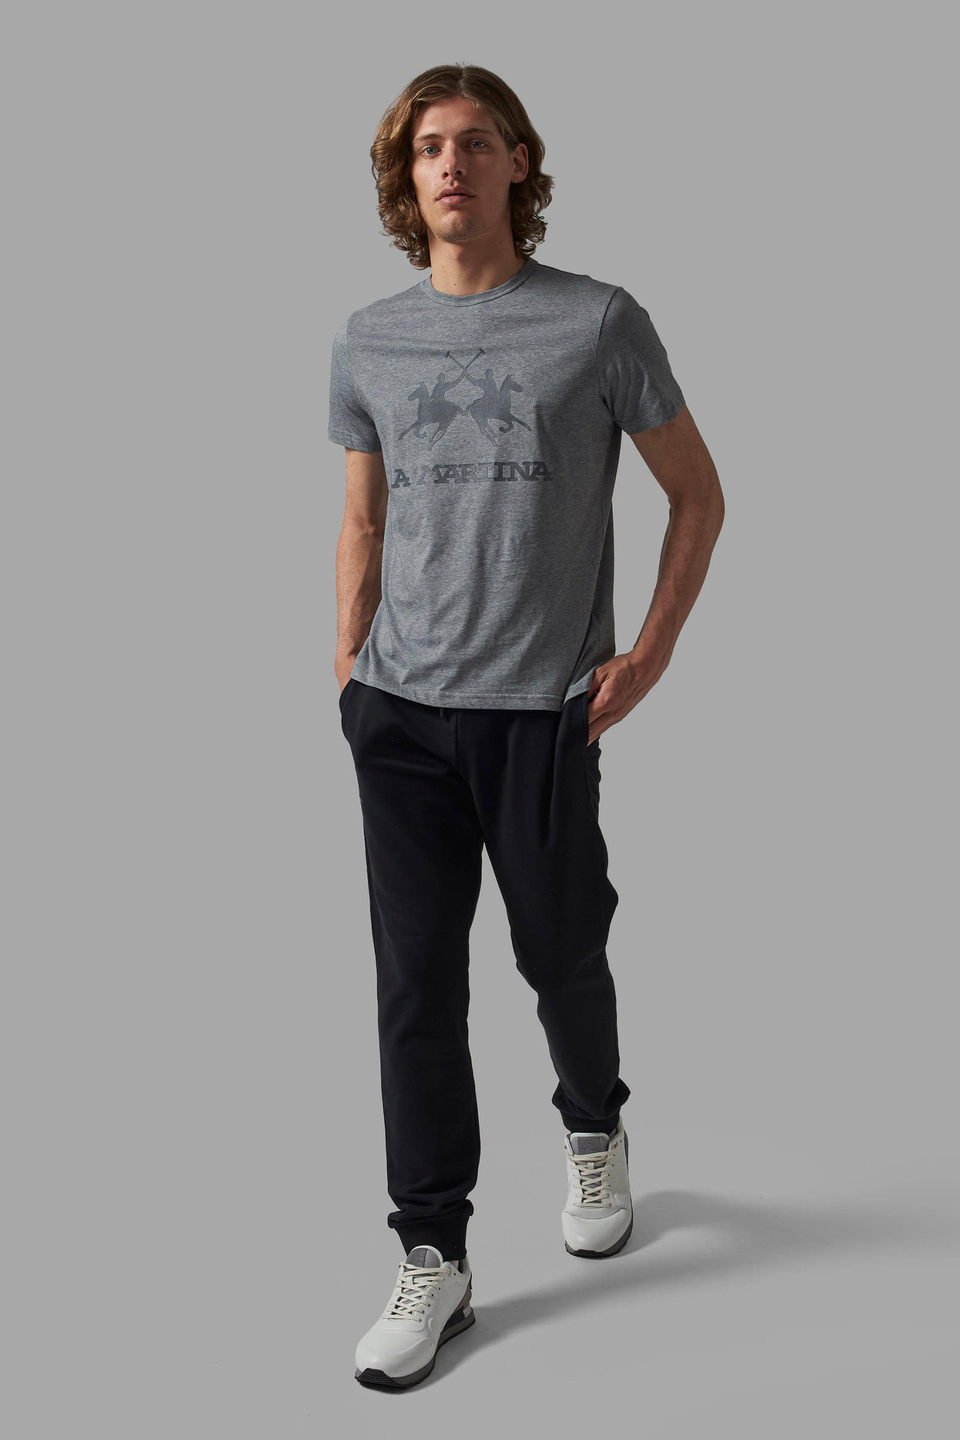 Men's jogging trousers in a regular fit - Paco | La Martina - Official Online Shop